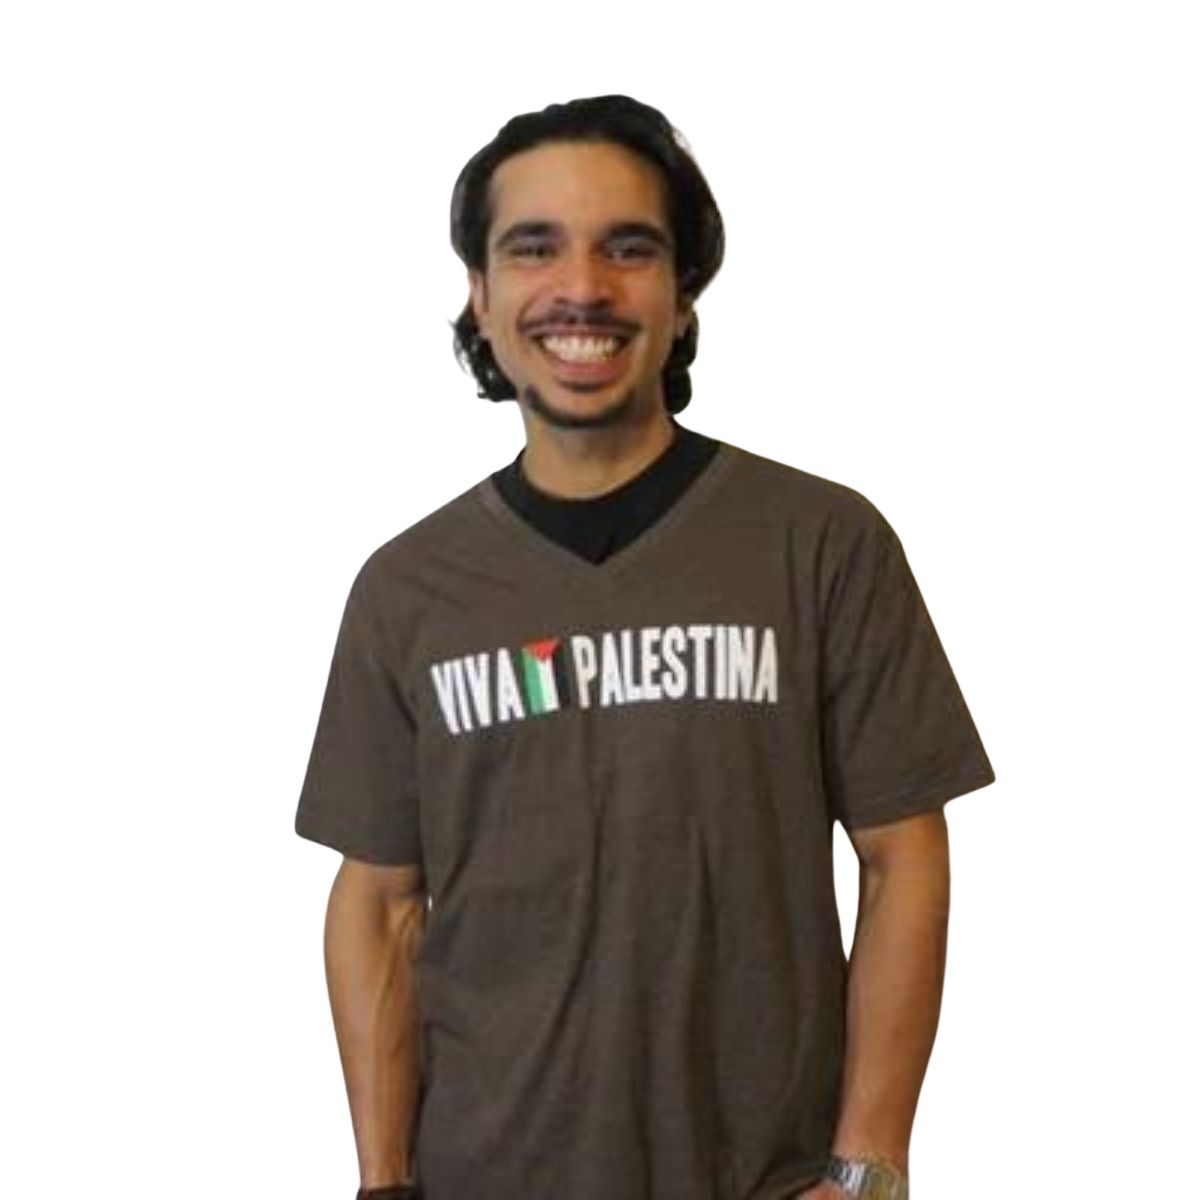 Viva Palestina T-shirt